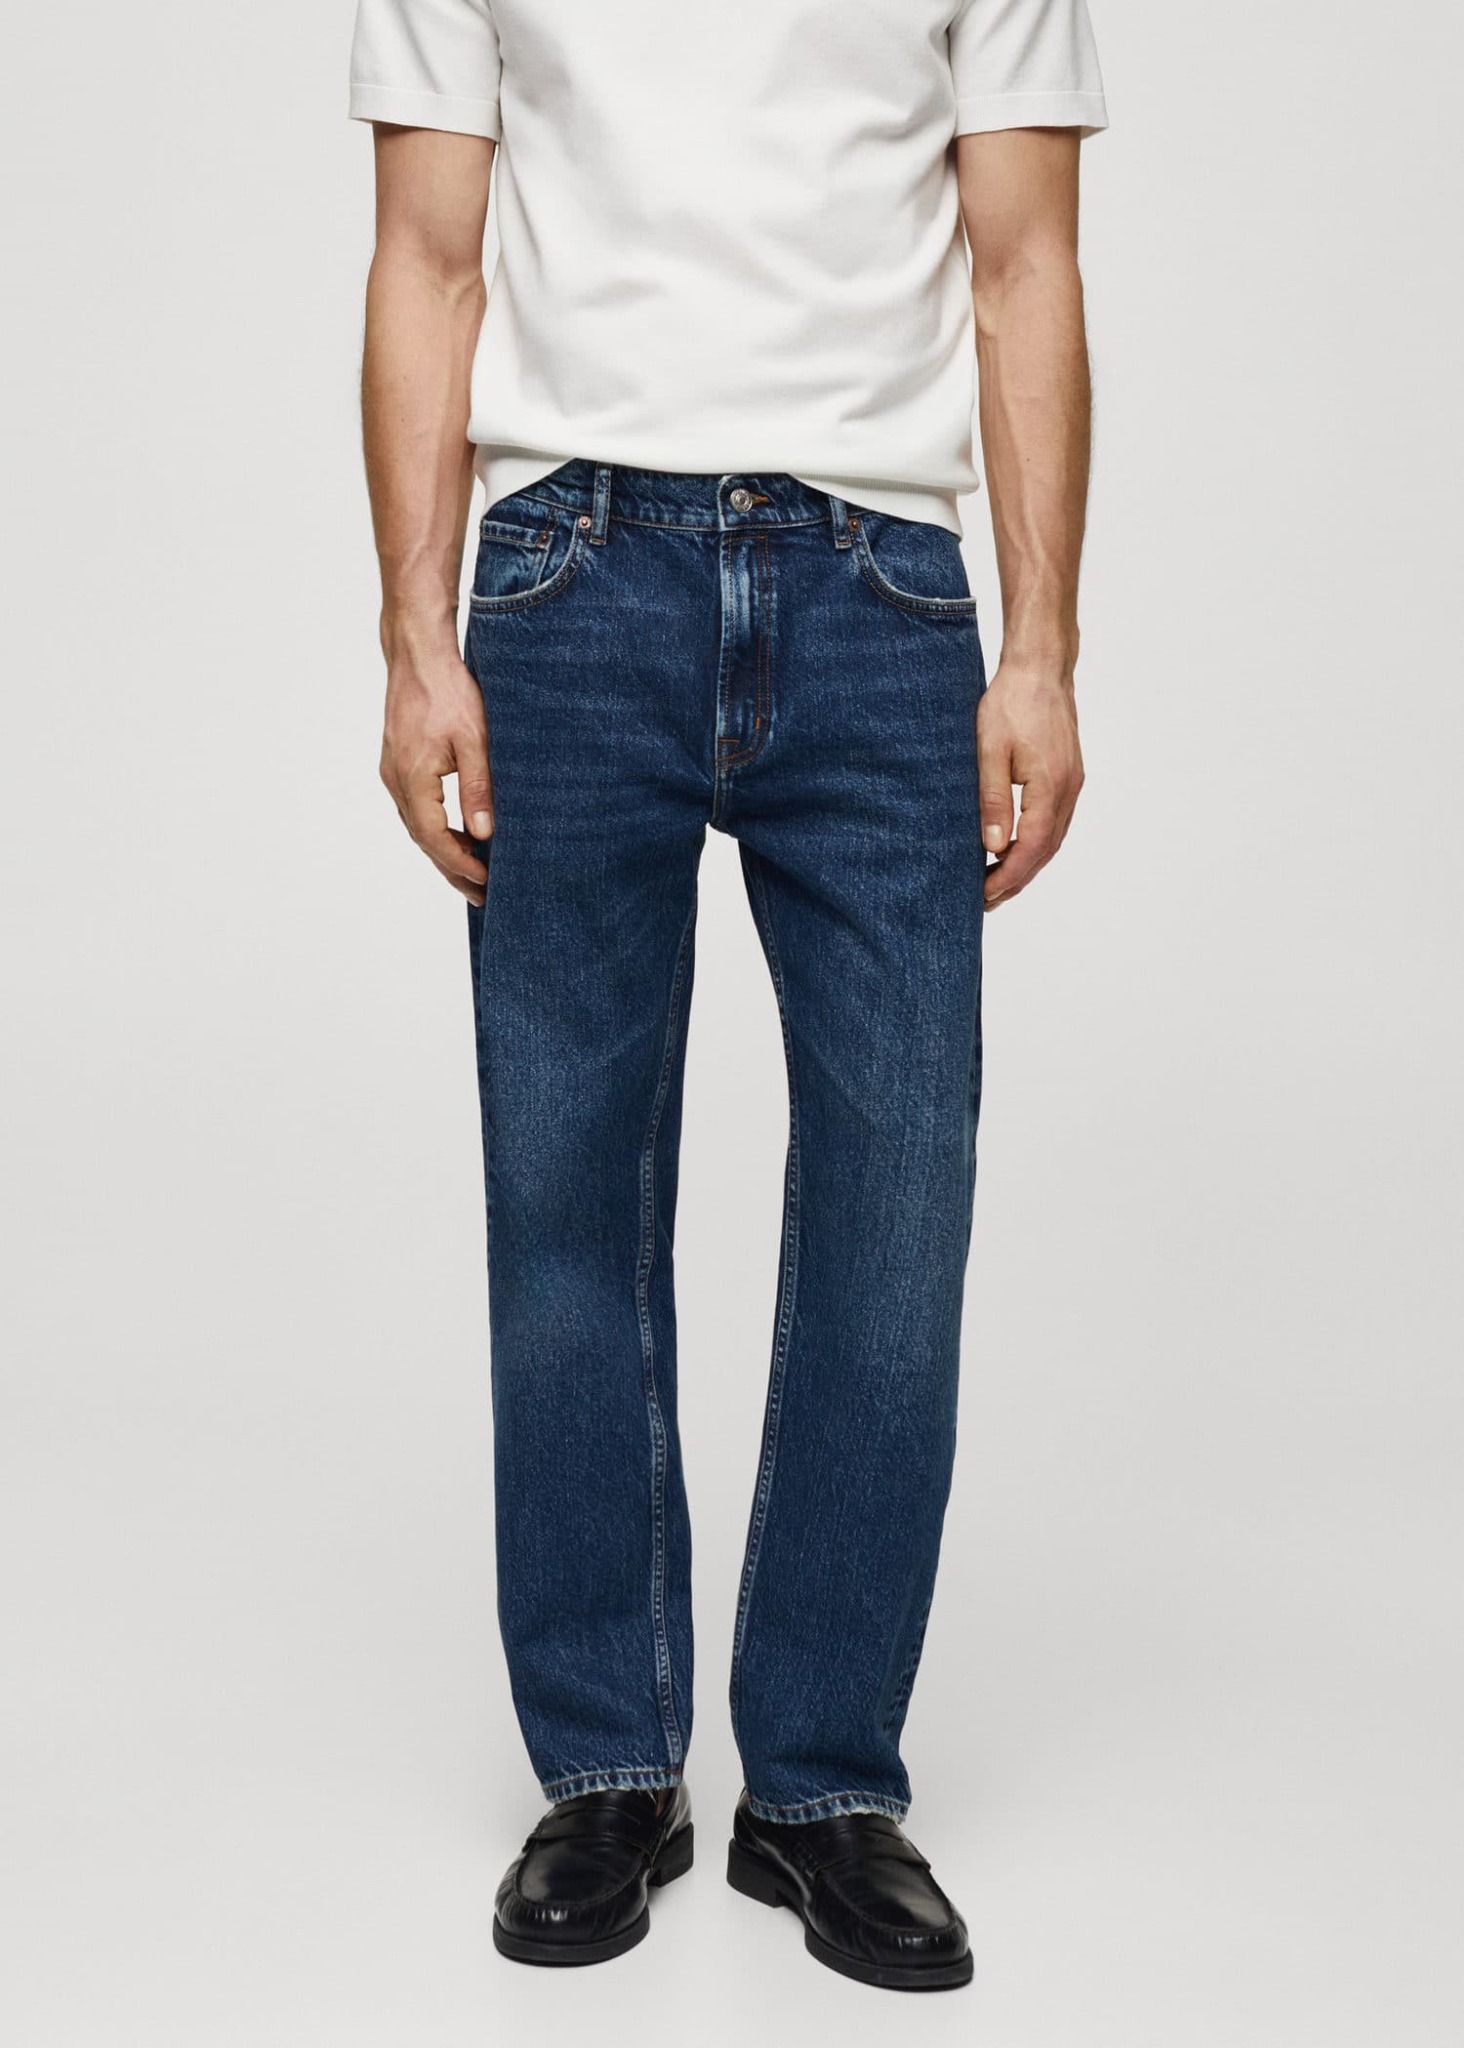 Mango - Quần jeans nam Regular fit dark wash jeans